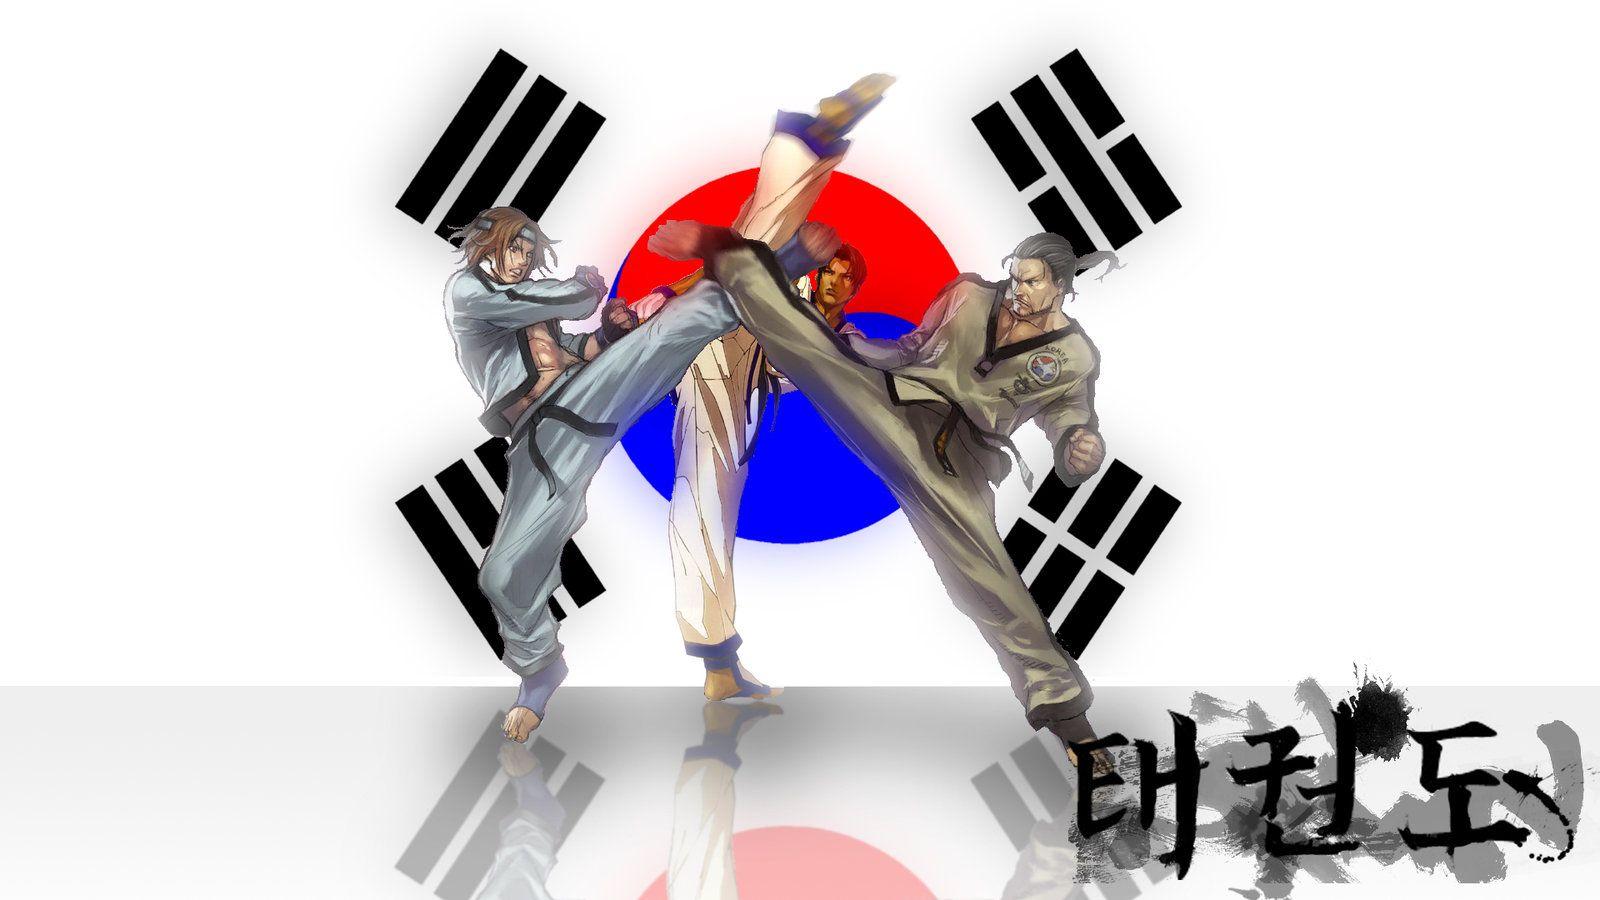 Taekwondo Images - Free Download on Freepik